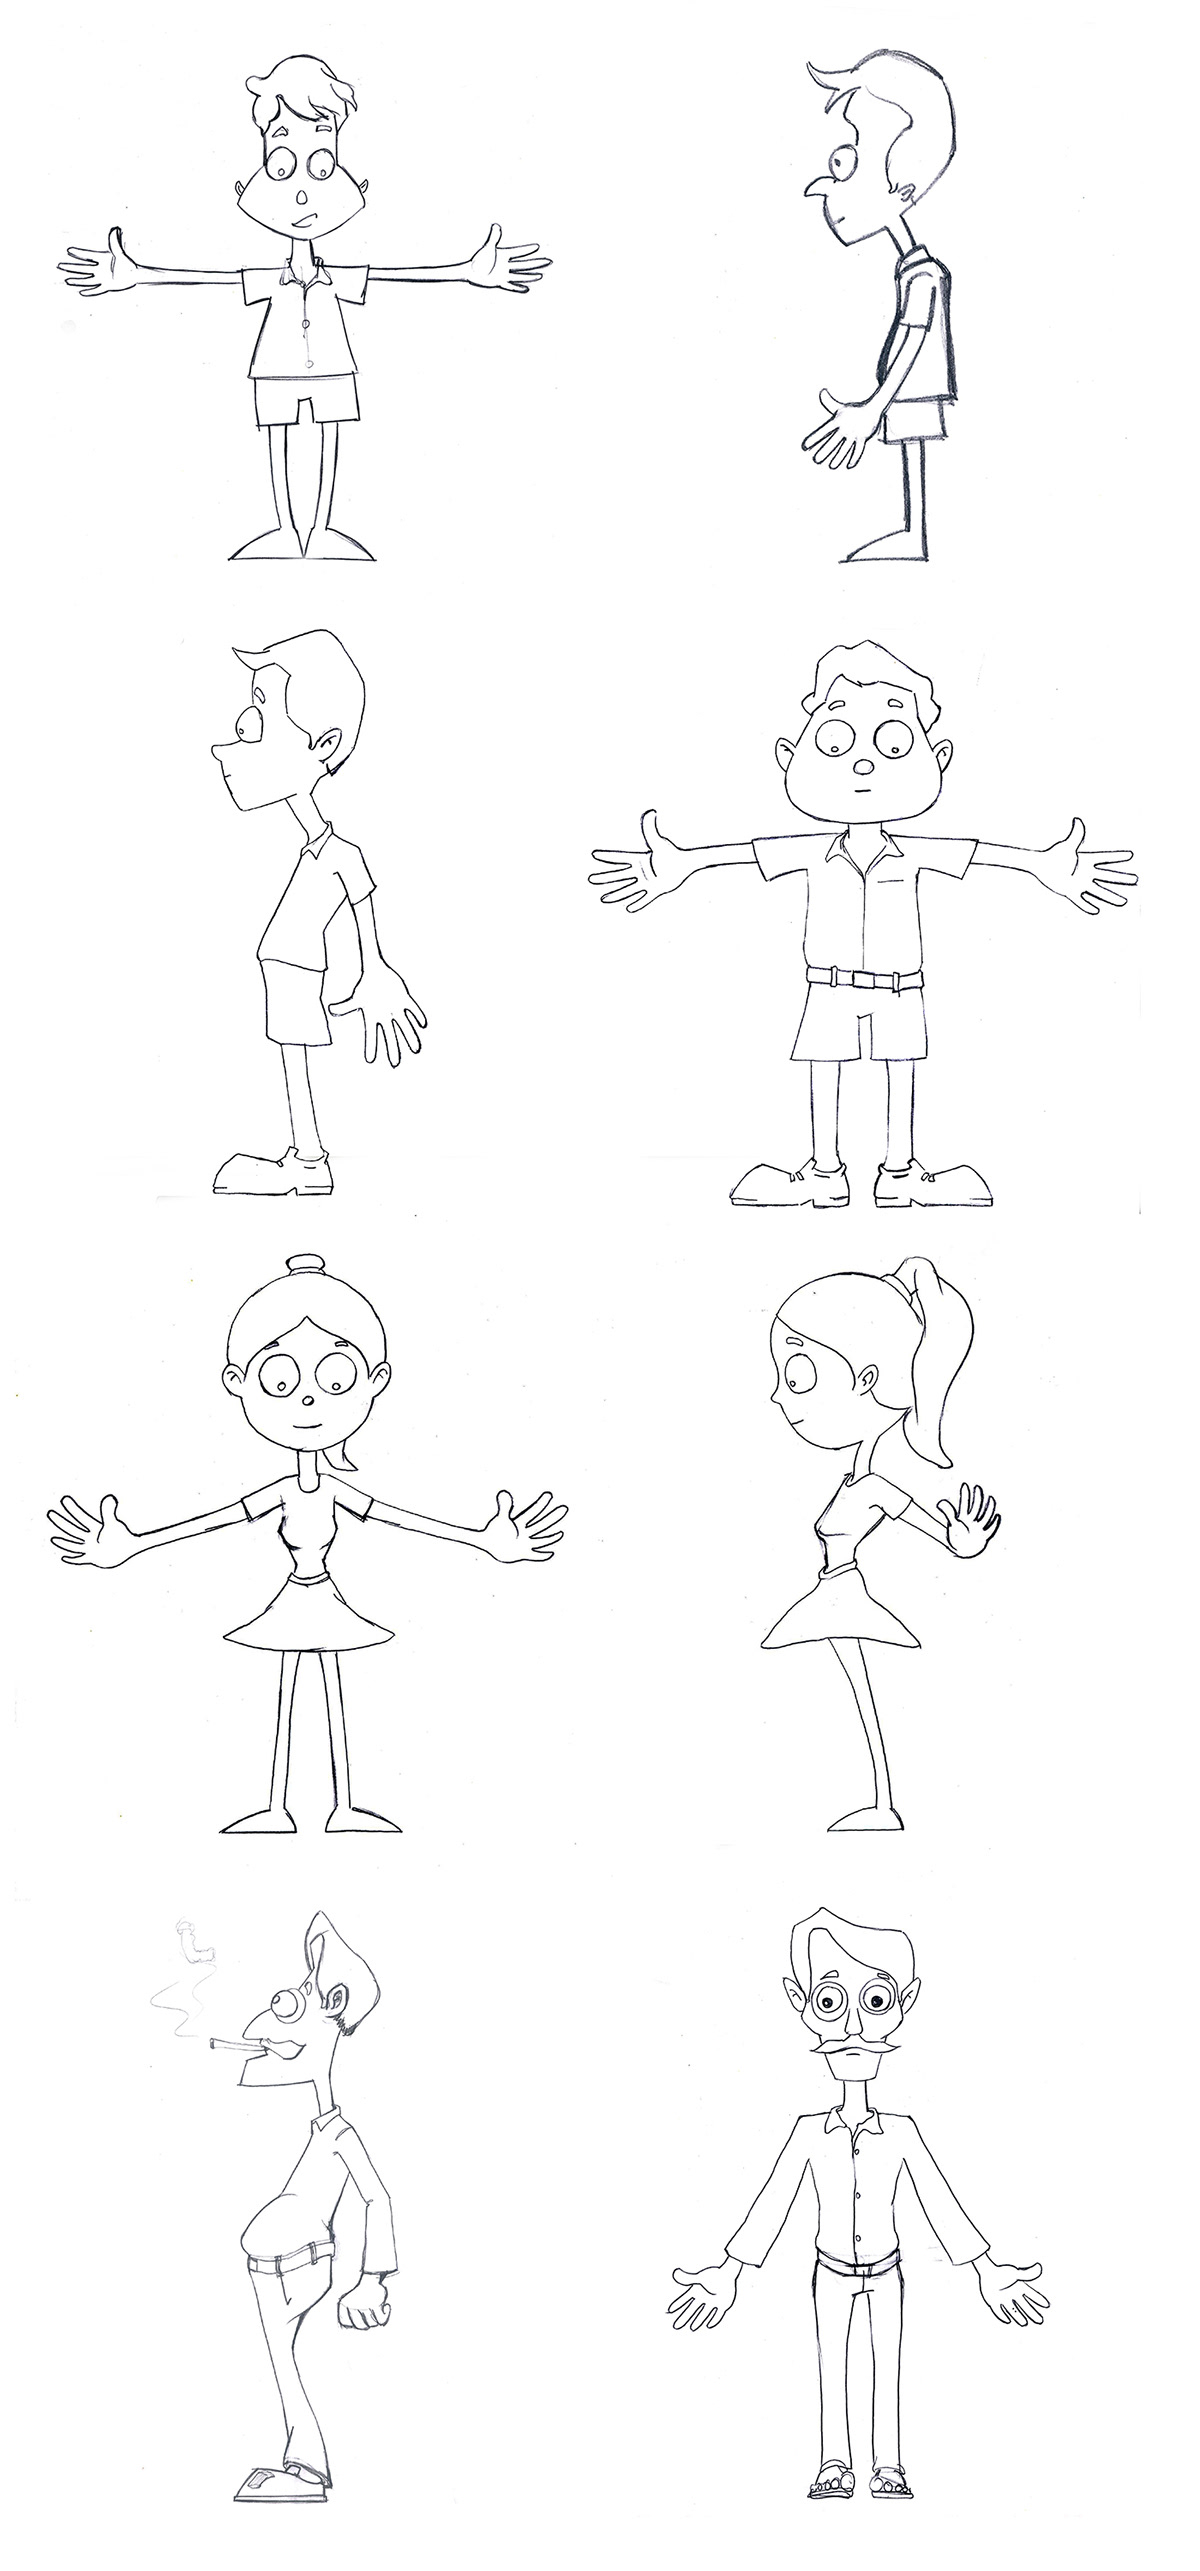 characters cartoon drawings Character exploractions